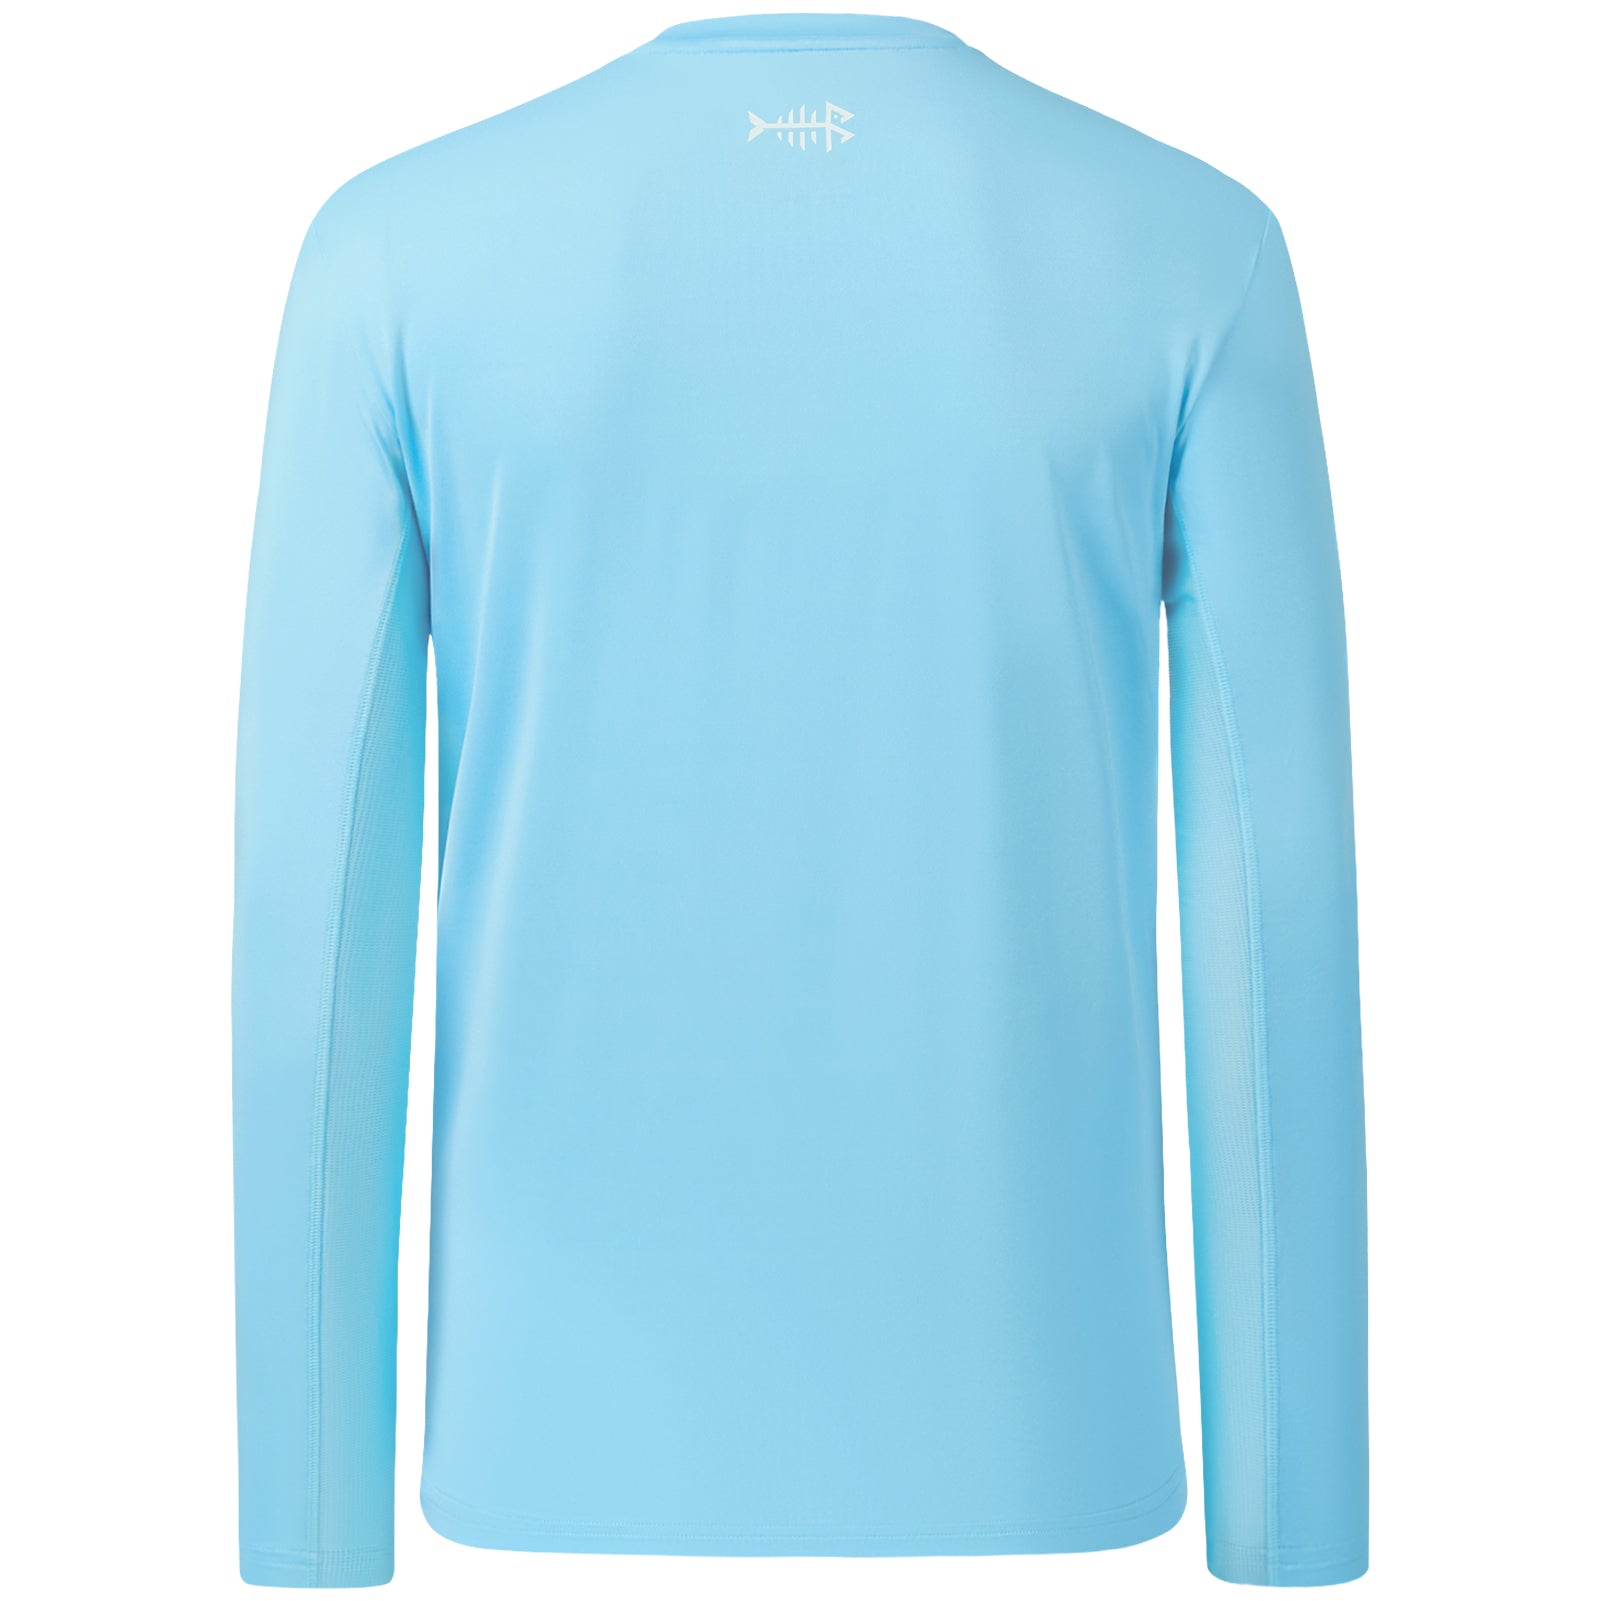 SUFIX Men's Fly Fishing Shirt Long Sleeve Vented Multi Pocket Light Blue  Size L